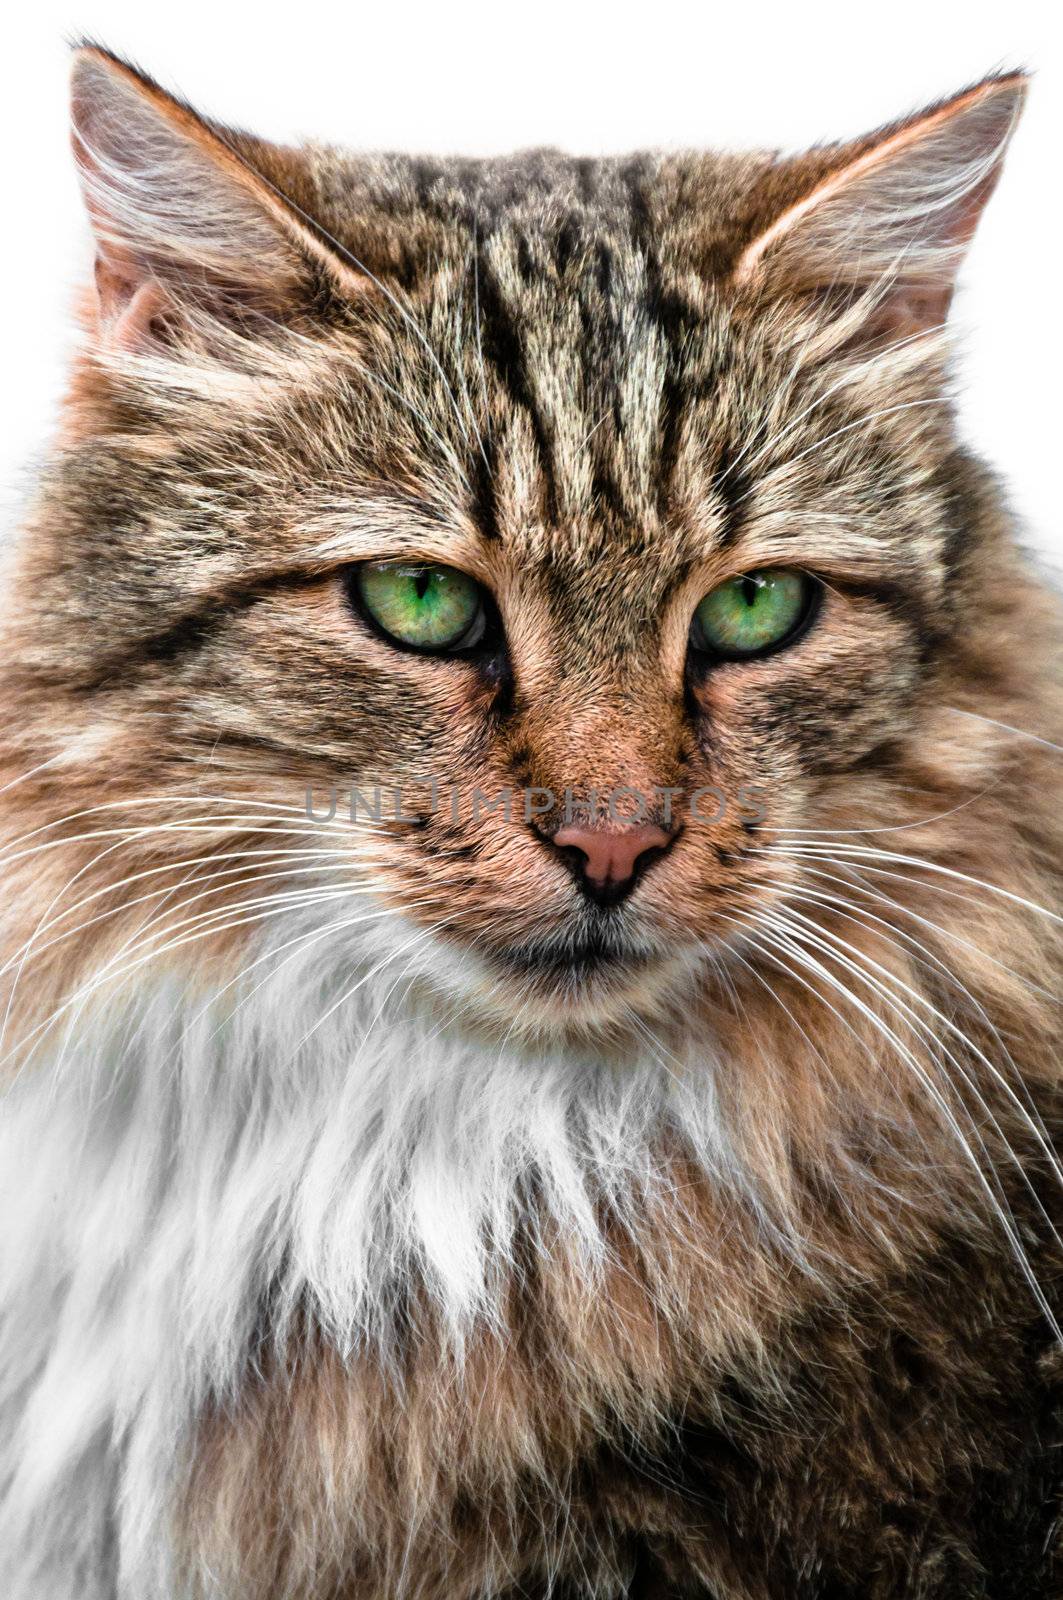 Looking cat portrait front view by dmitryelagin